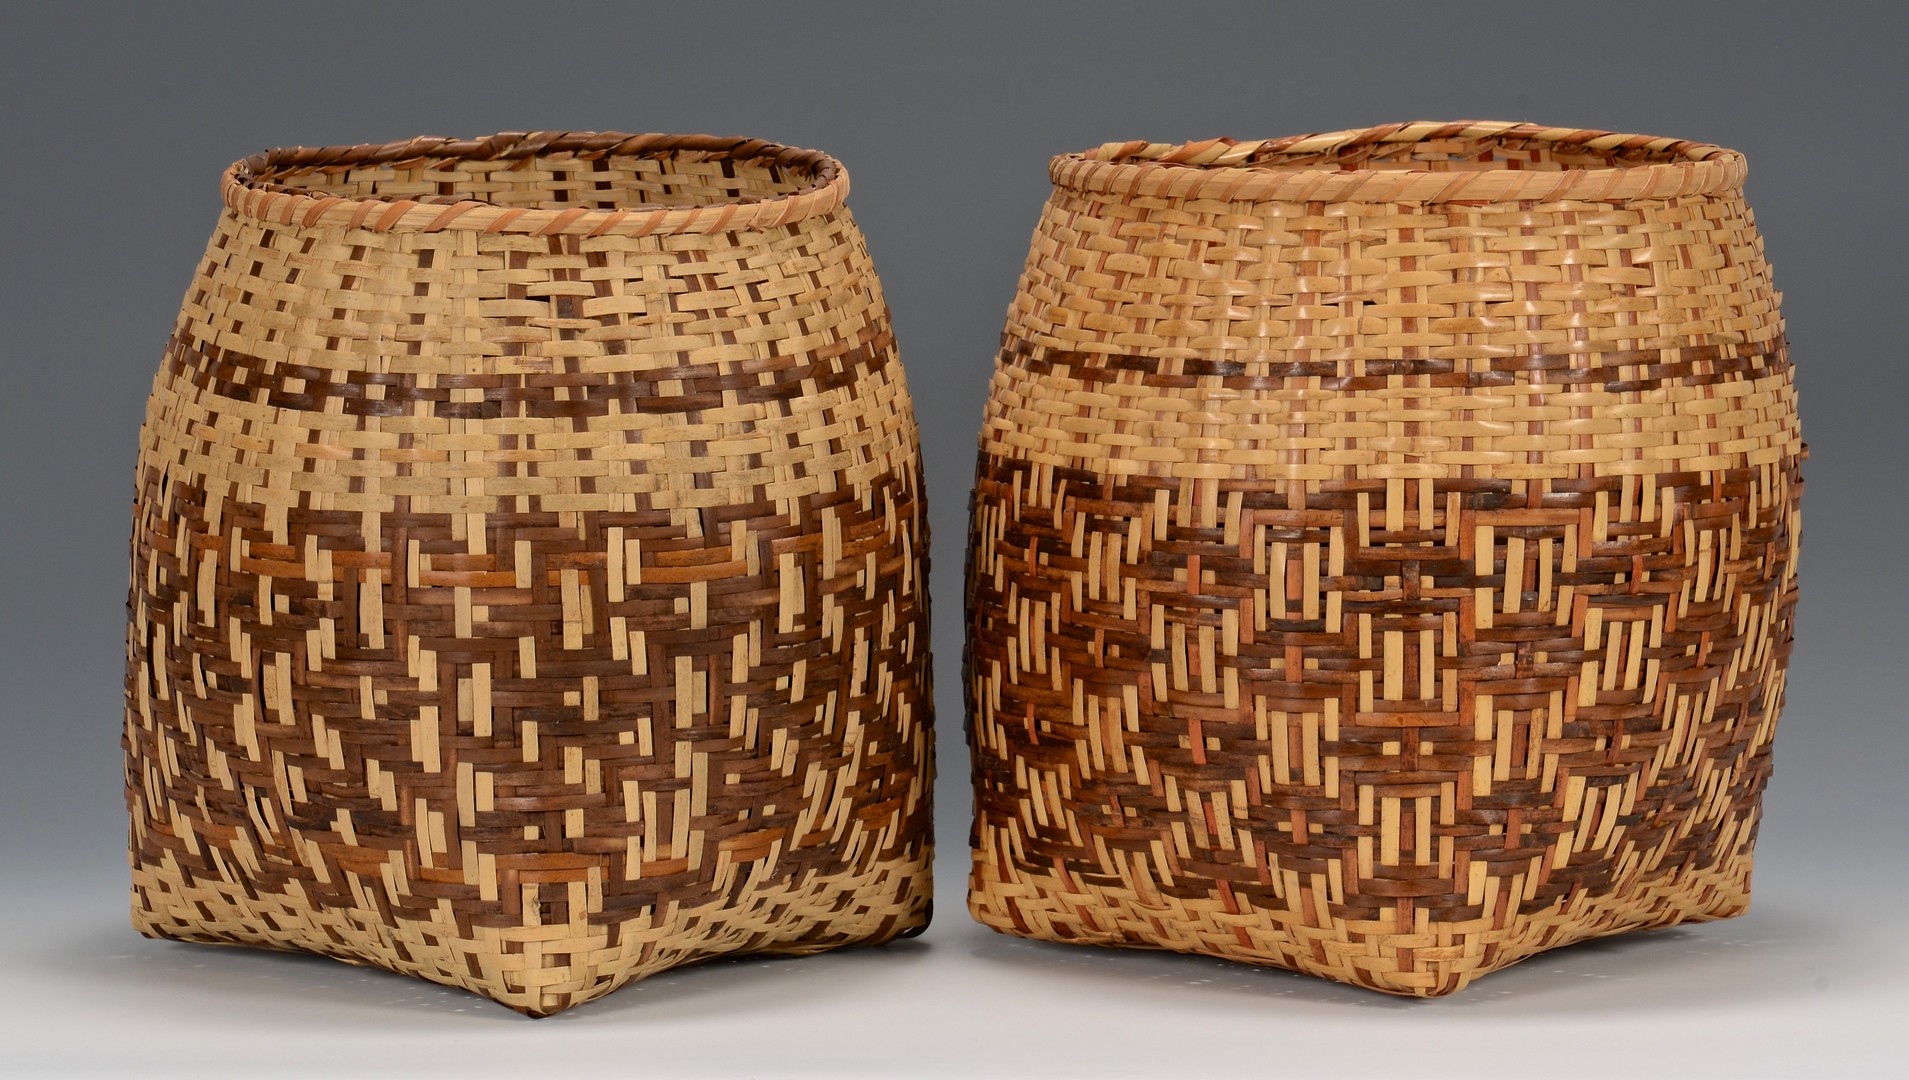 Lot 520: 3 Cherokee River Cane Baskets